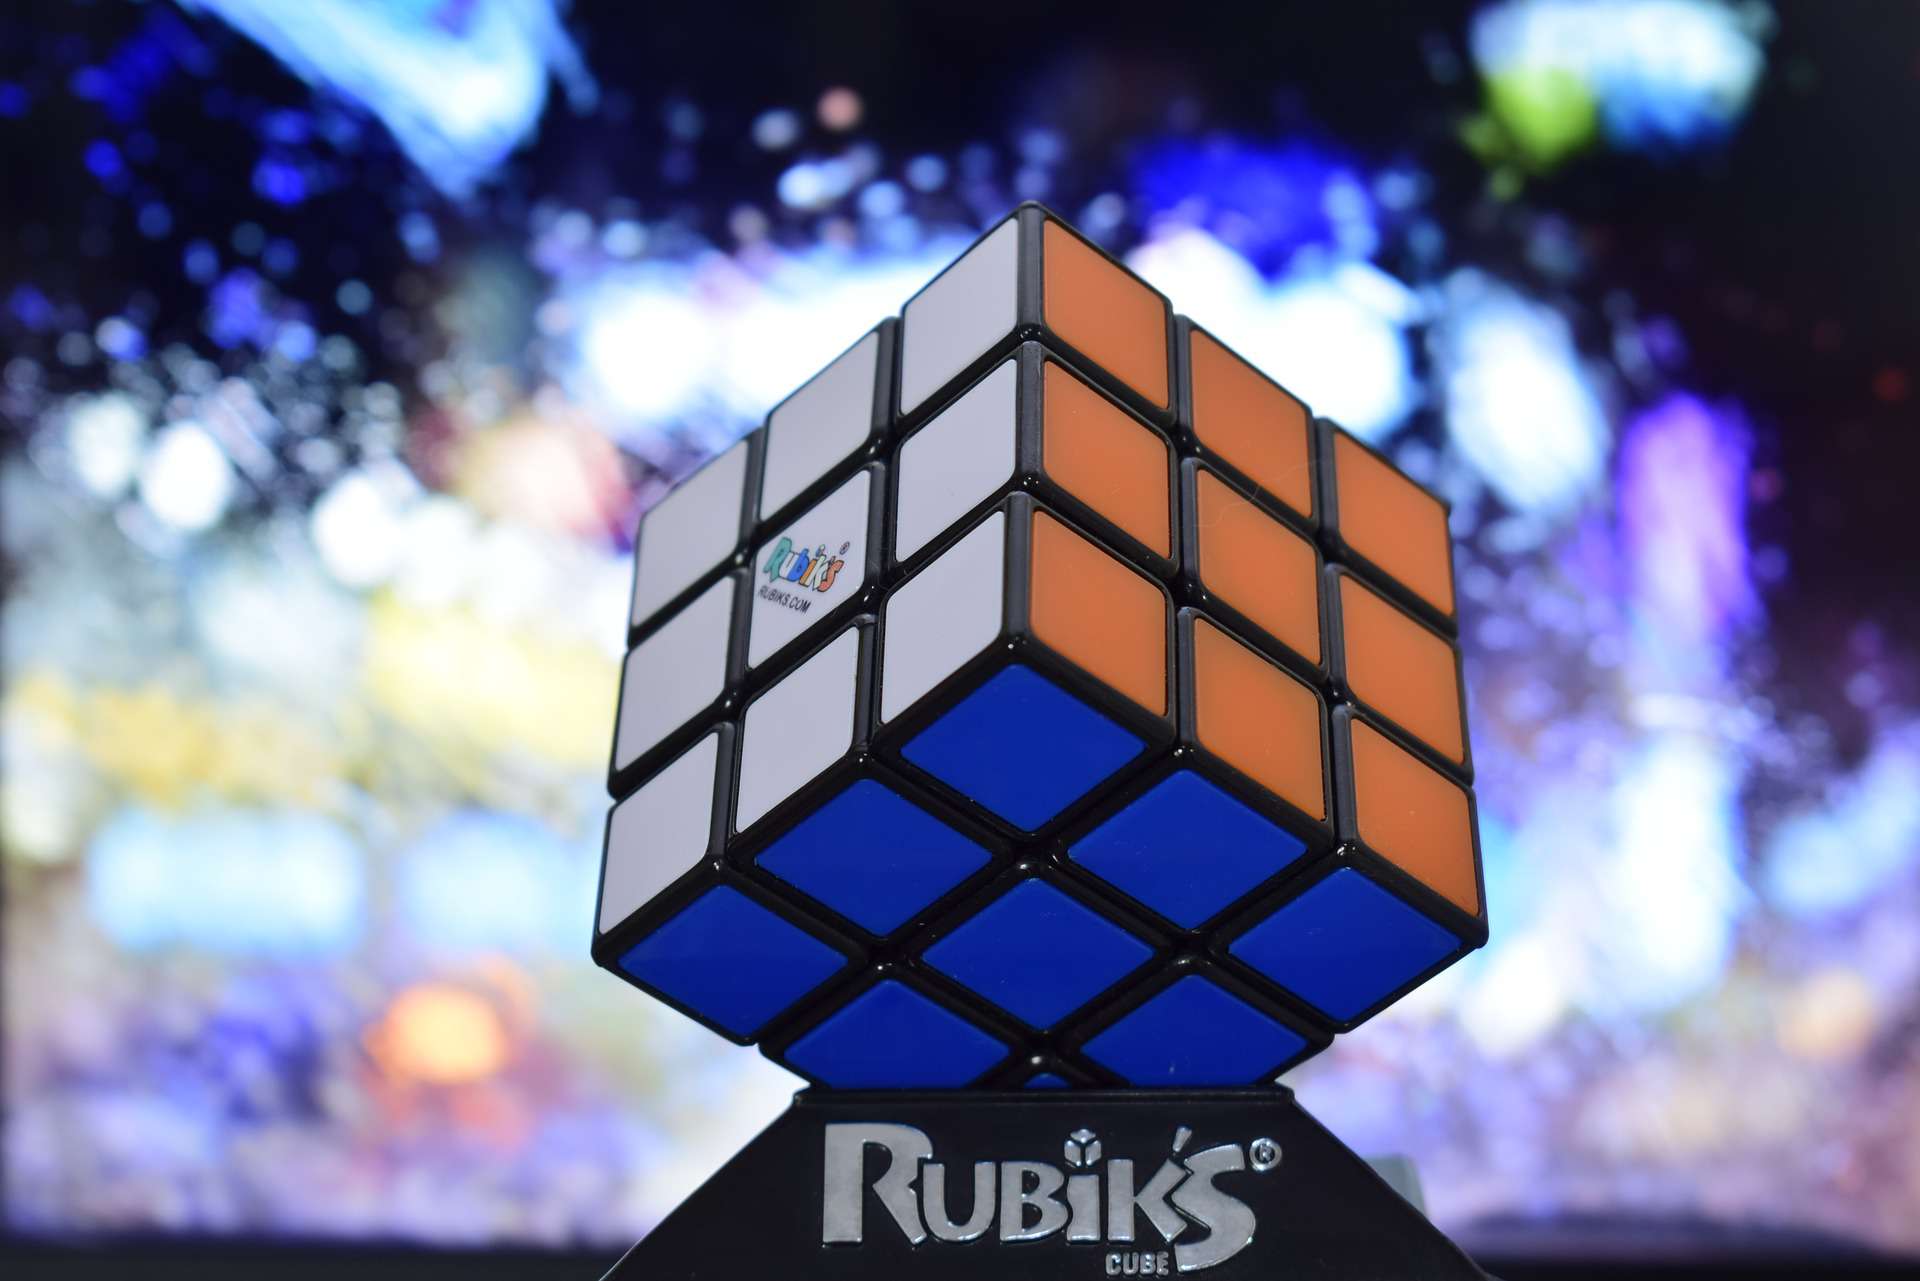 cubo di Rubik